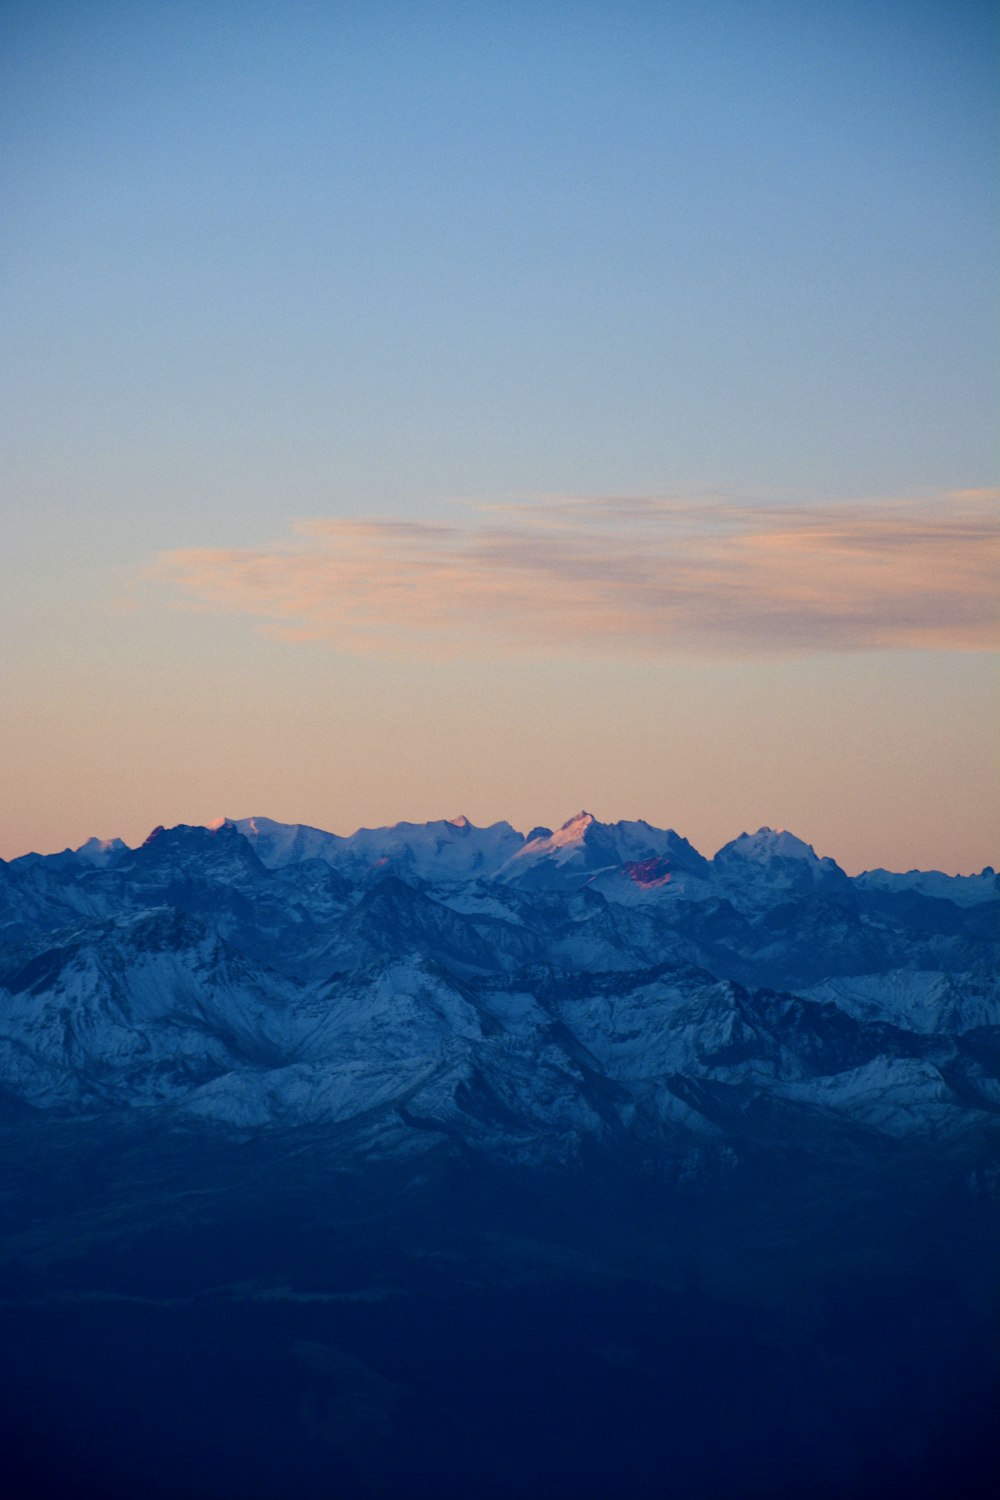 a mountain range with a blue sky